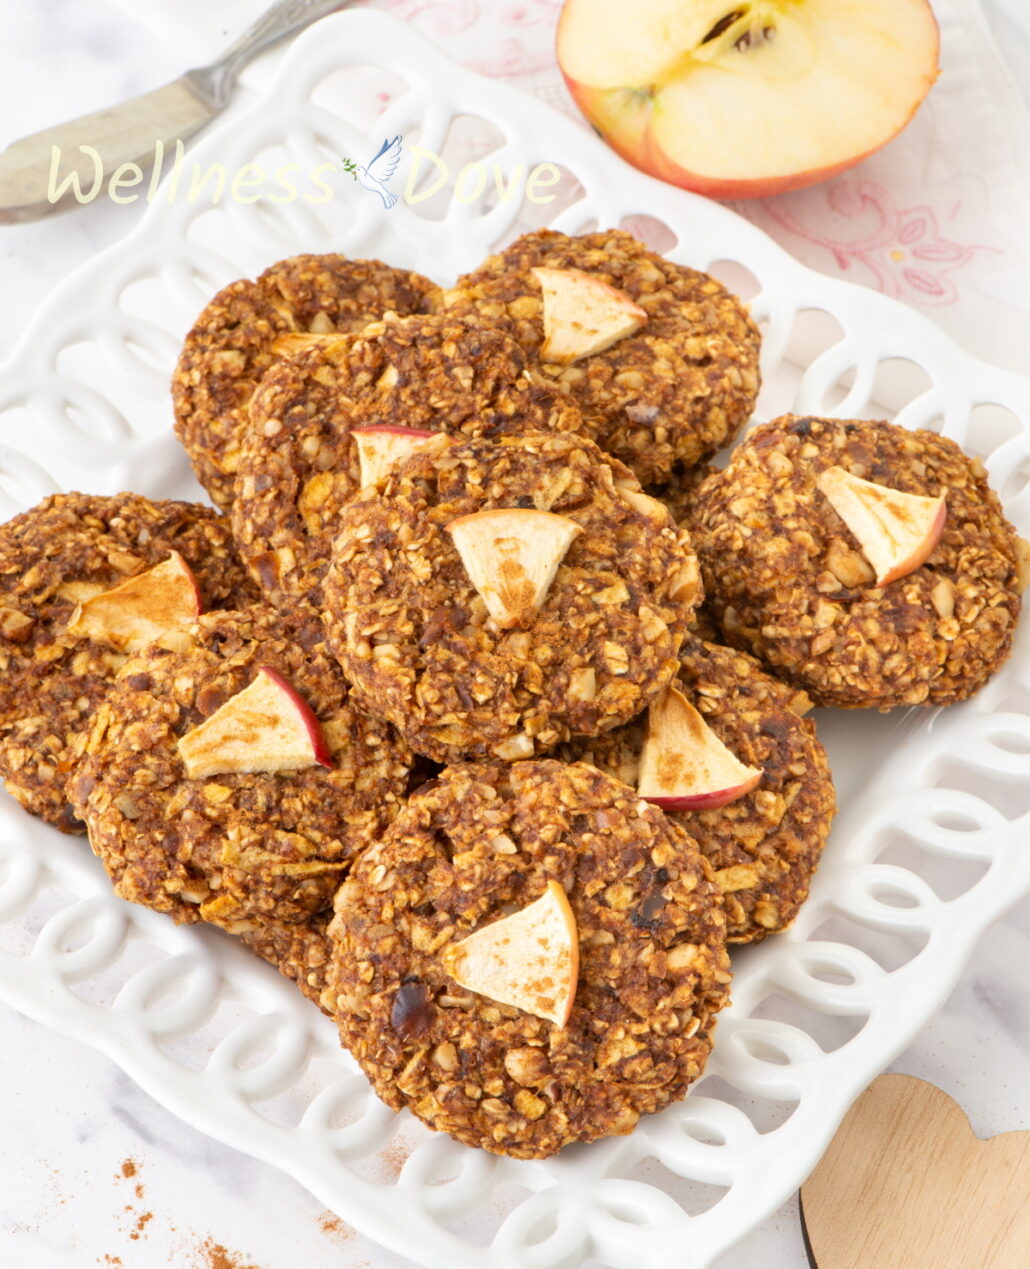 the Apple Oatmeal Vegan Breakfast Cookies in a rectangular plate.